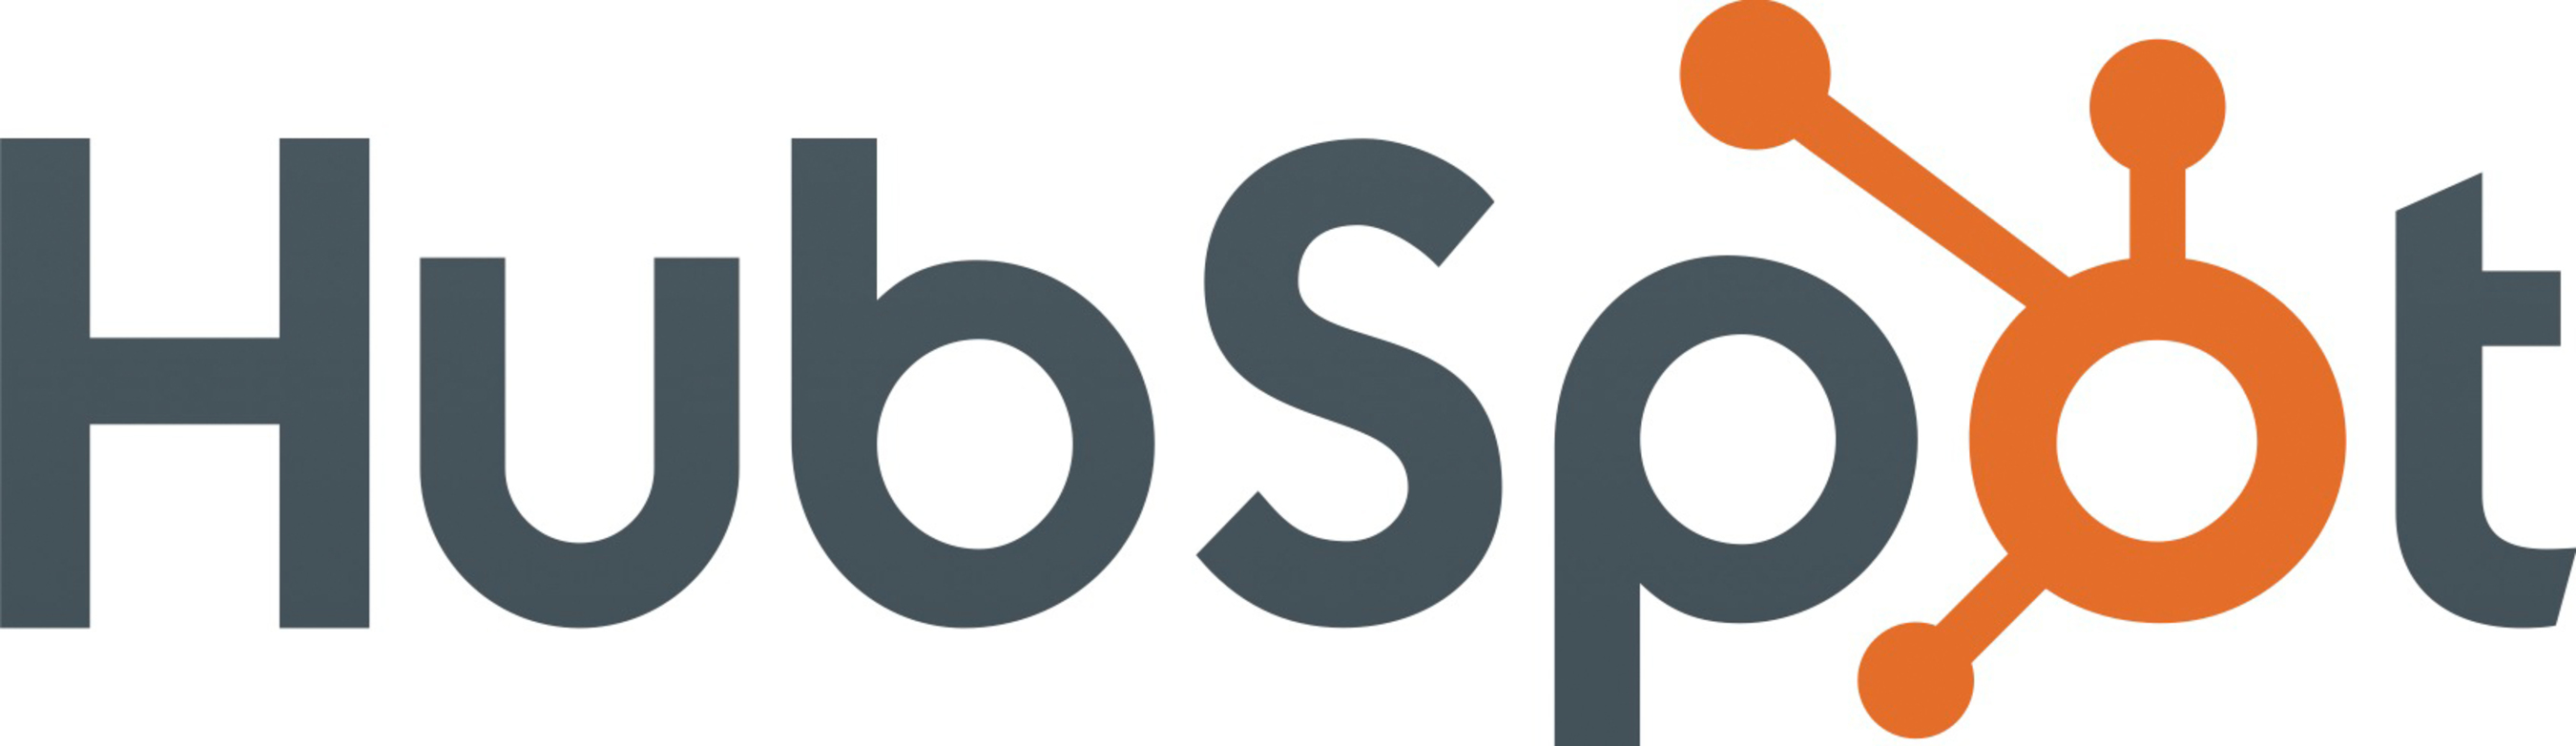 HubSpot, Inc. logo -  www.hubspot.com . (PRNewsFoto/HubSpot, Inc.)